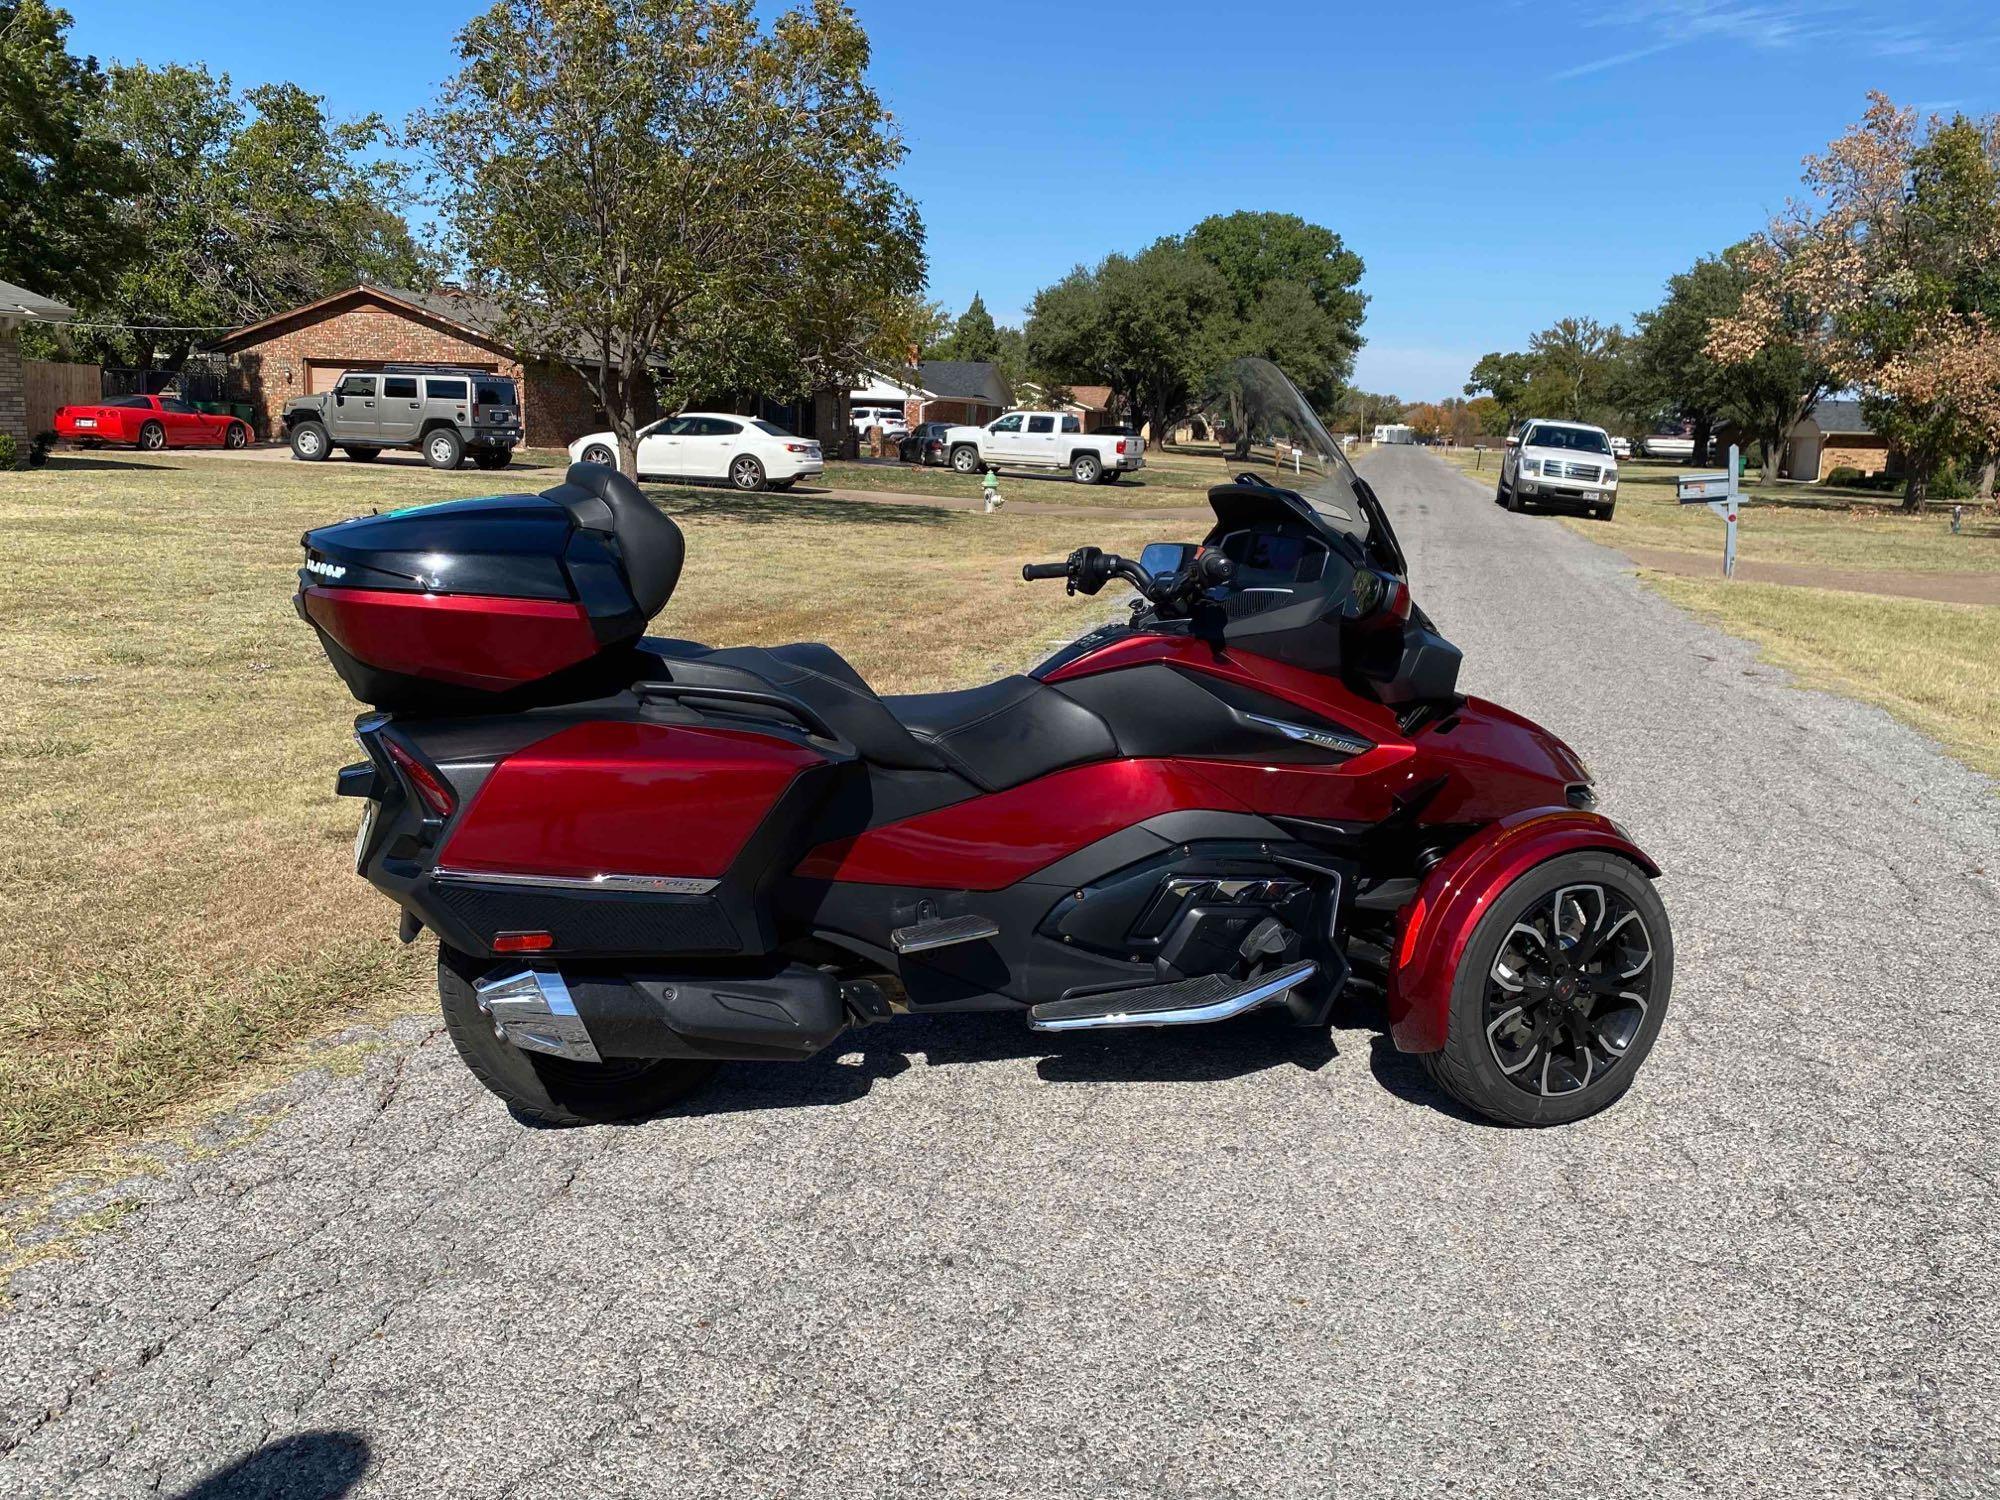 2020 Can-Am Spyder RT Motorcycle, VIN # 2bxnbdd23lv005780